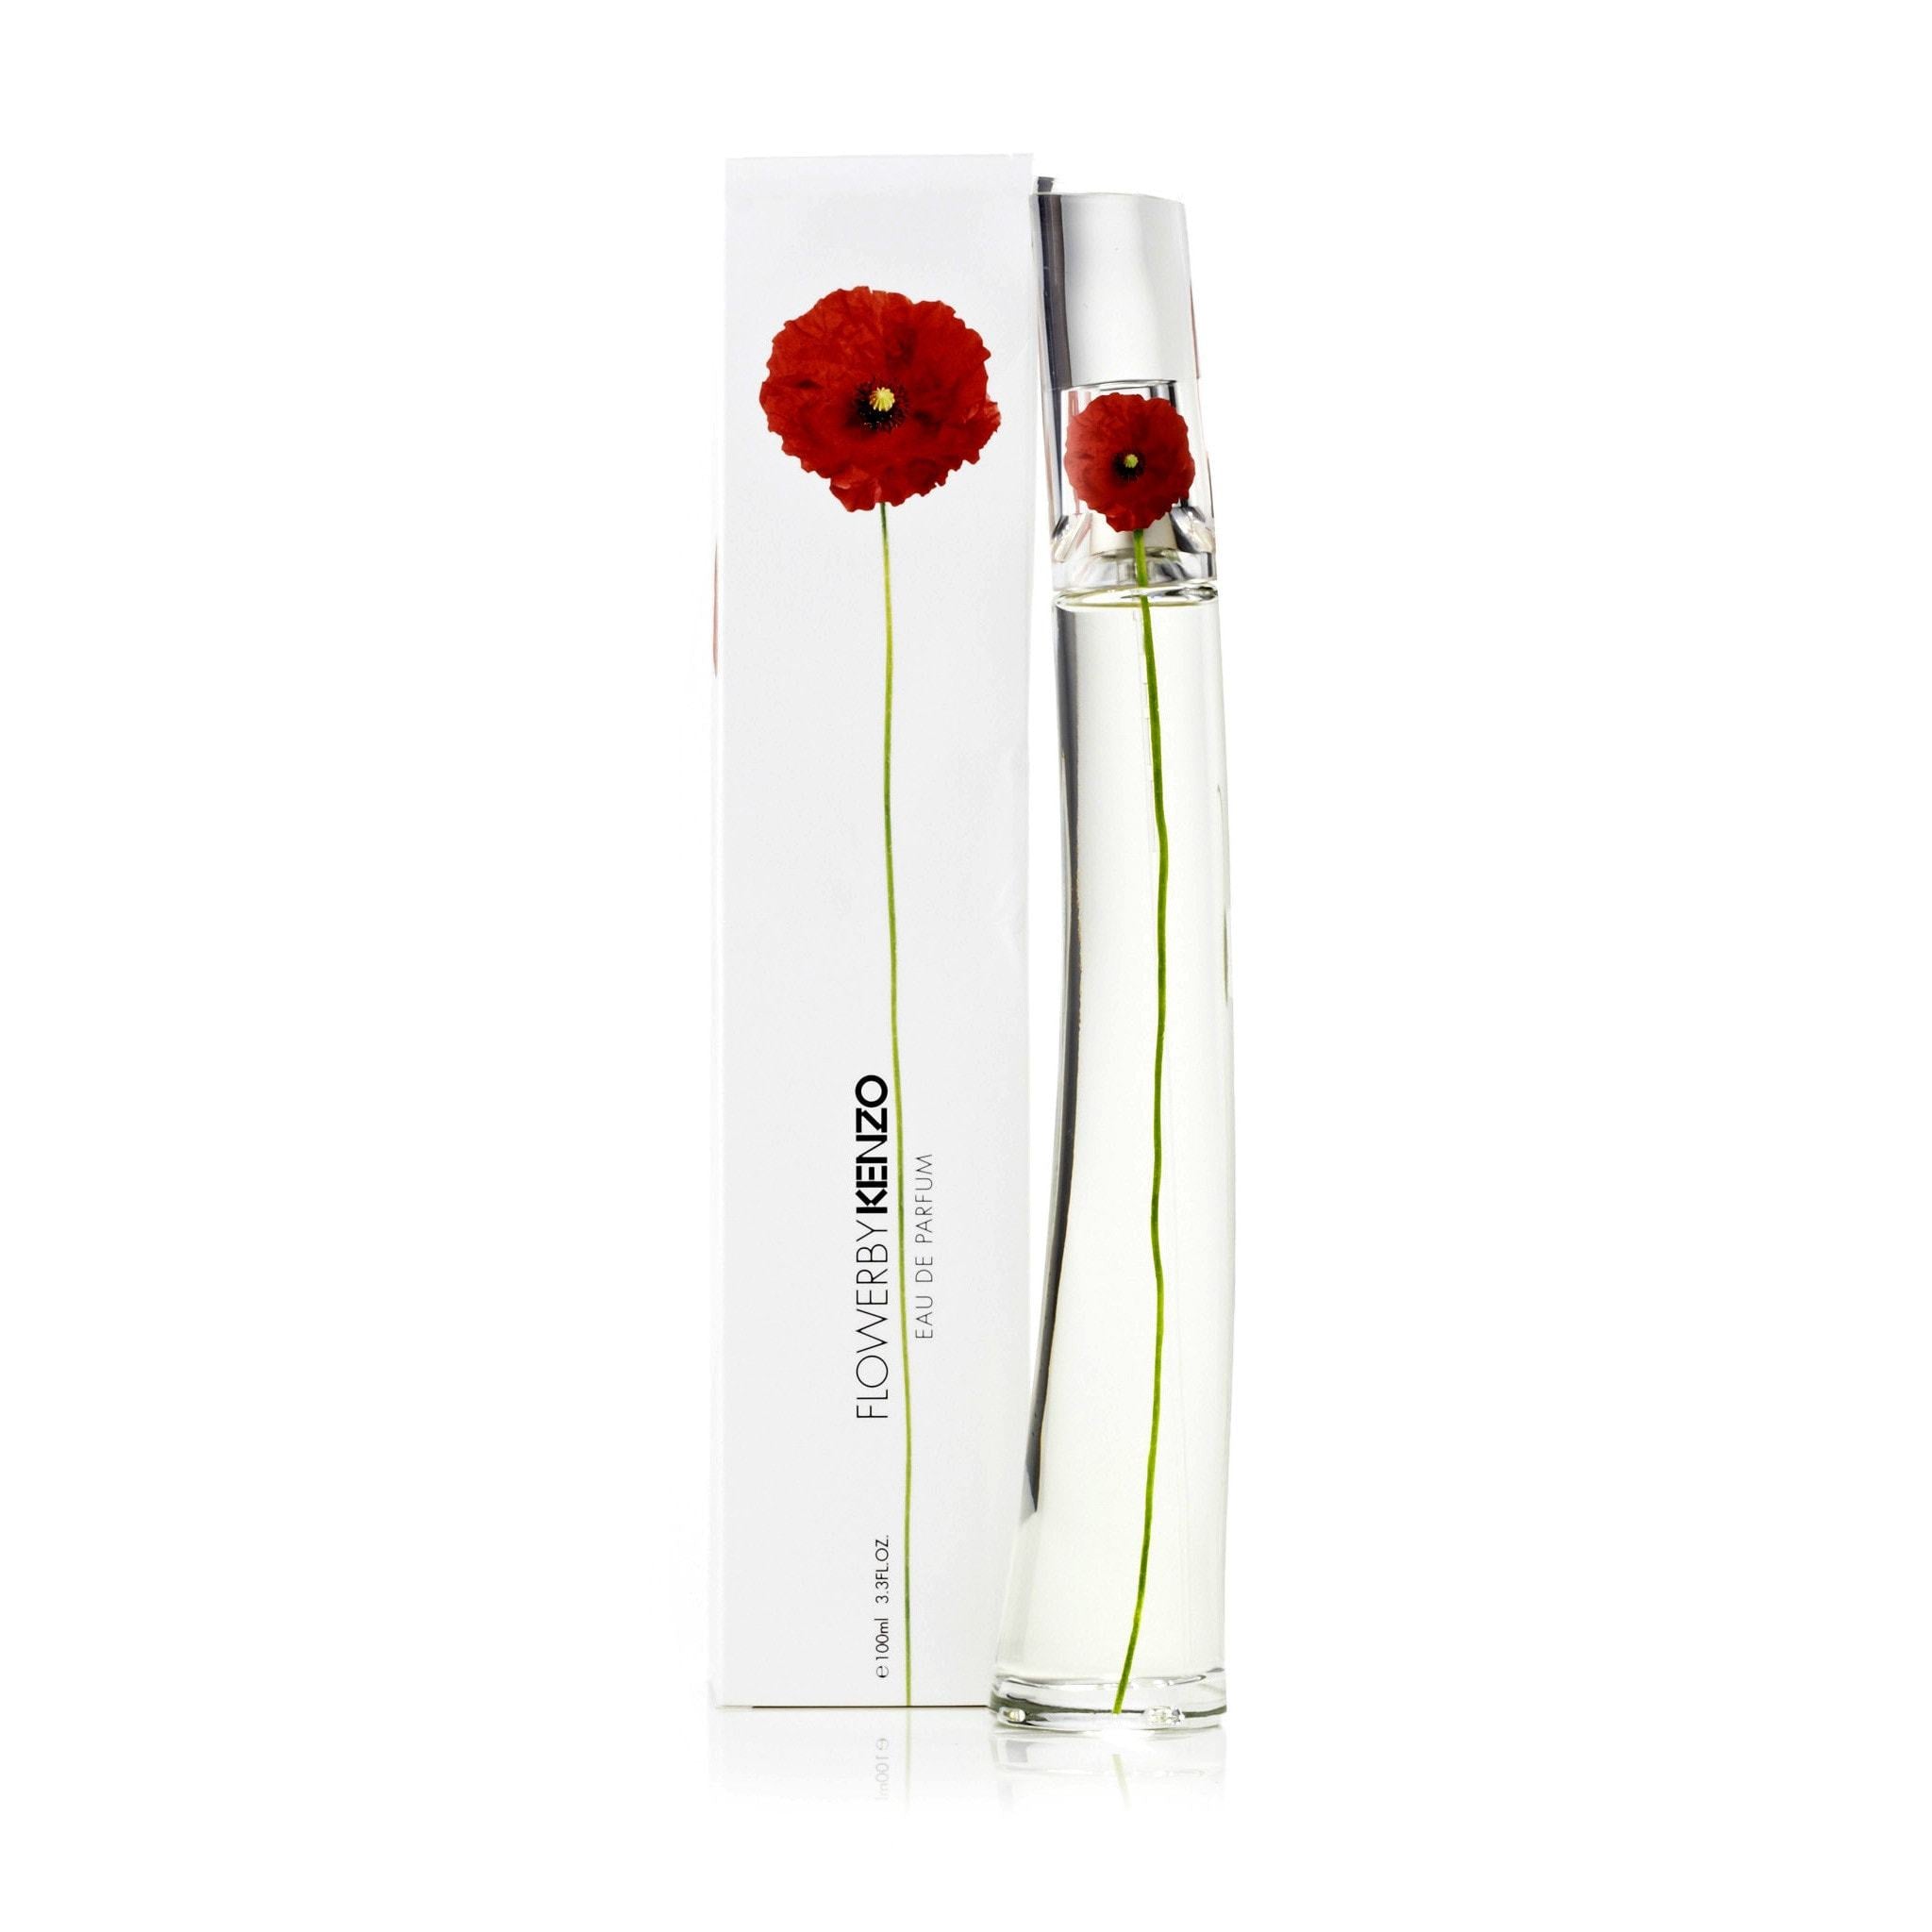 – Parfum for Kenzo Women by Spray Perfumania de Eau Flower